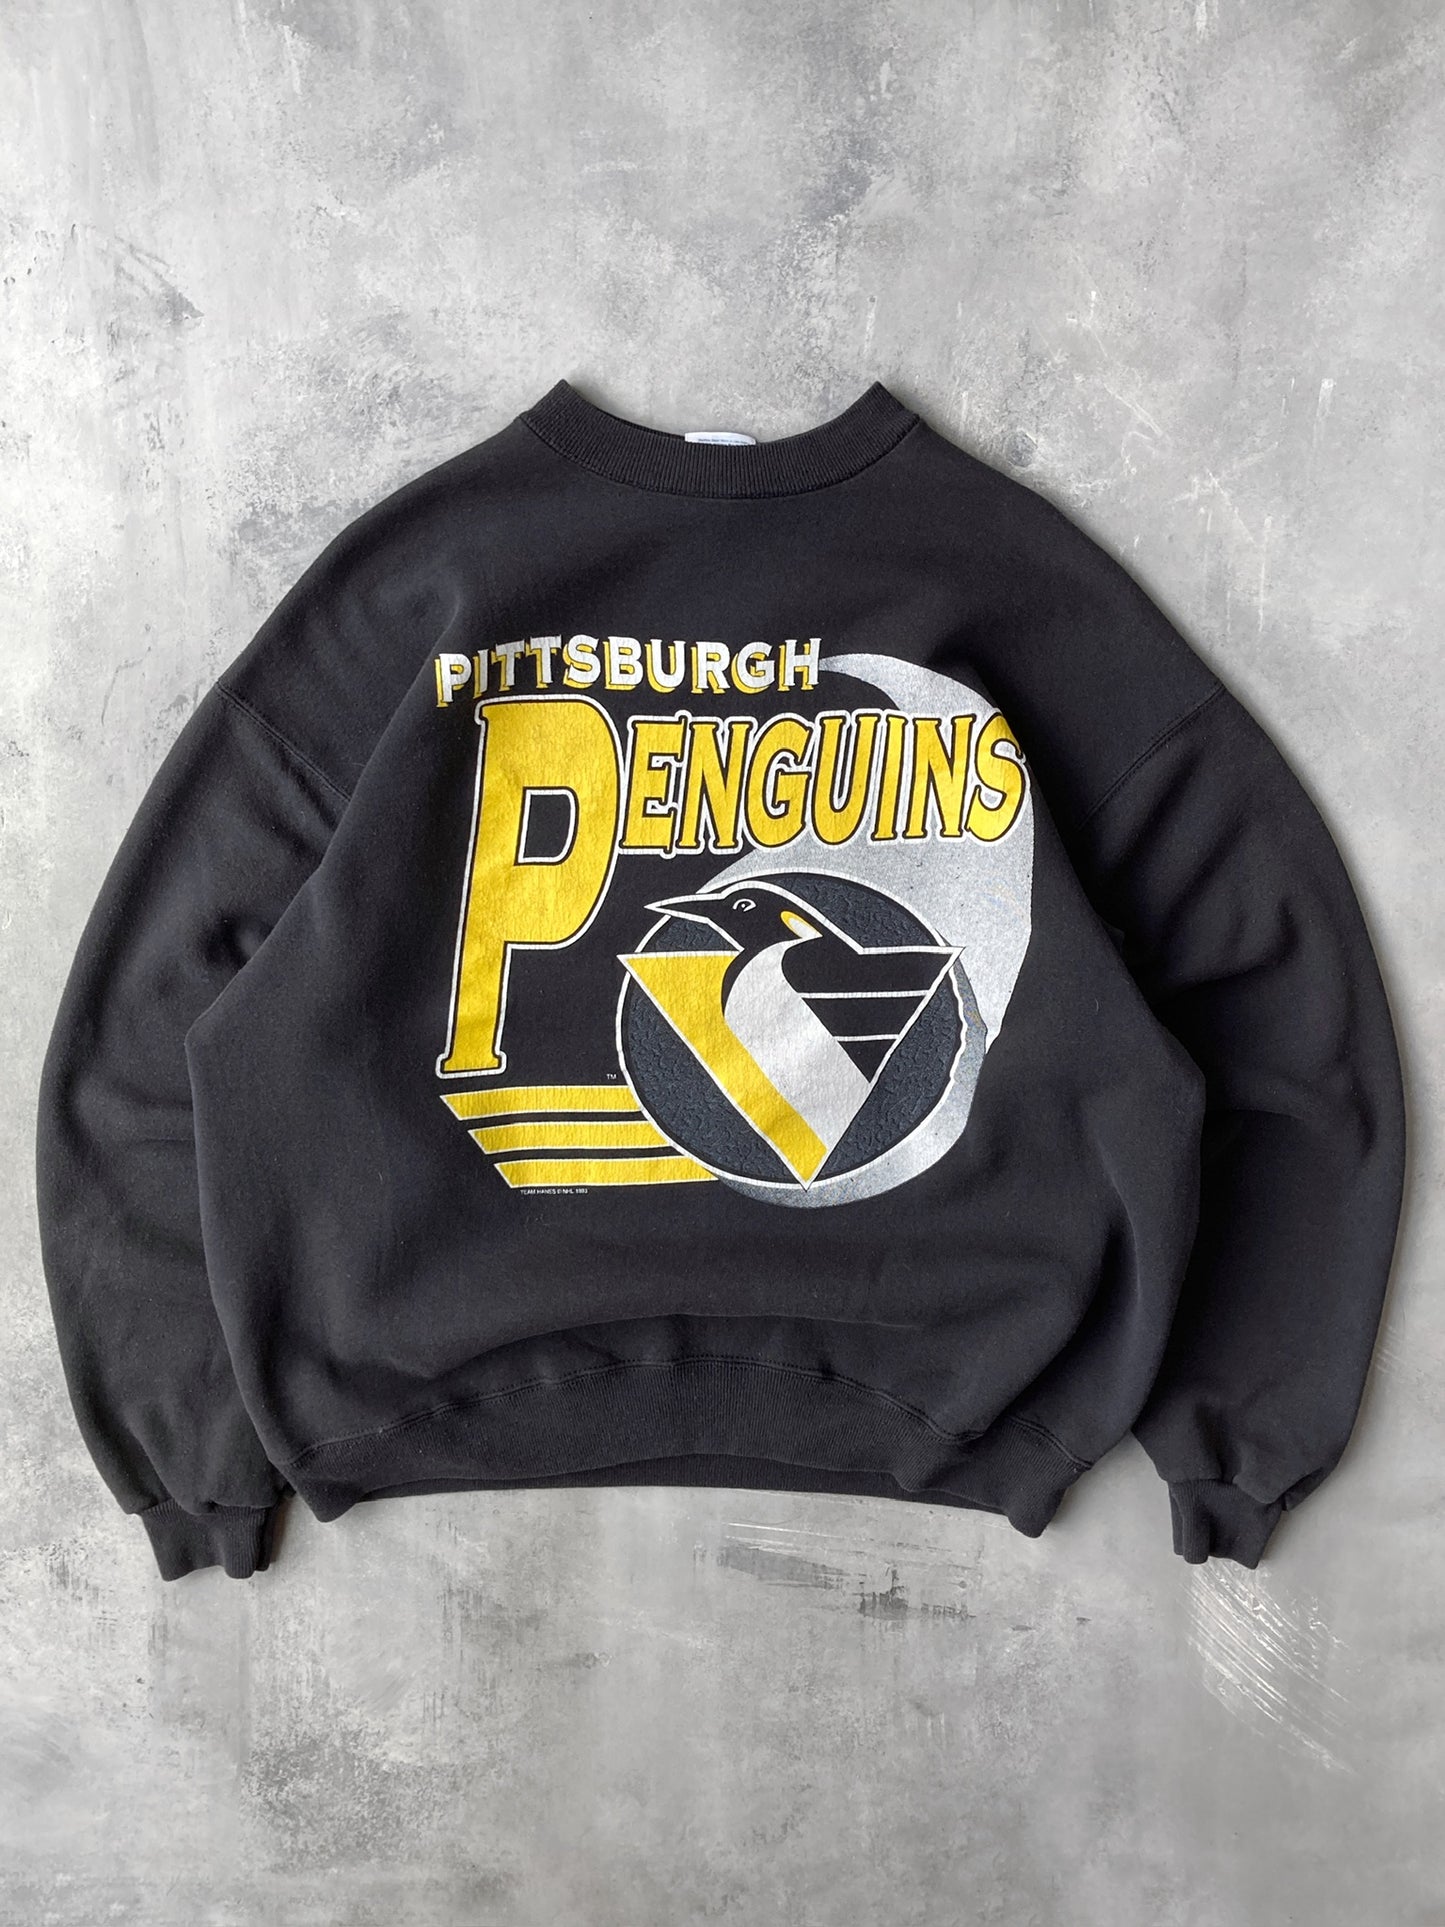 Pittsburgh Penguins Sweatshirt 90's - XL